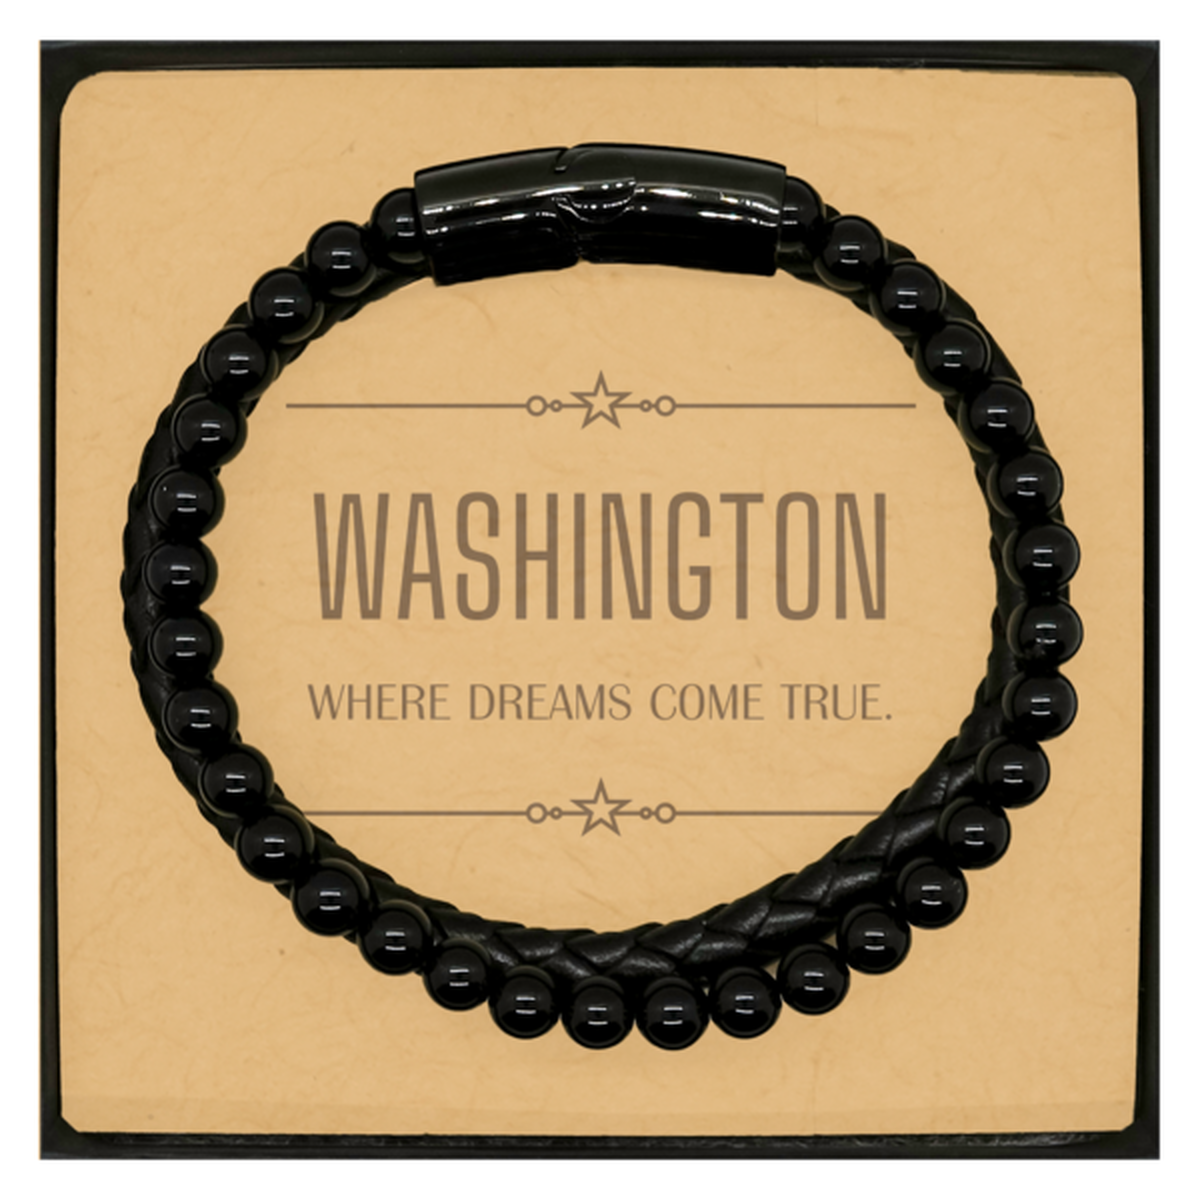 Love Washington State Stone Leather Bracelets, Washington Where dreams come true, Birthday Christmas Inspirational Gifts For Washington Men, Women, Friends